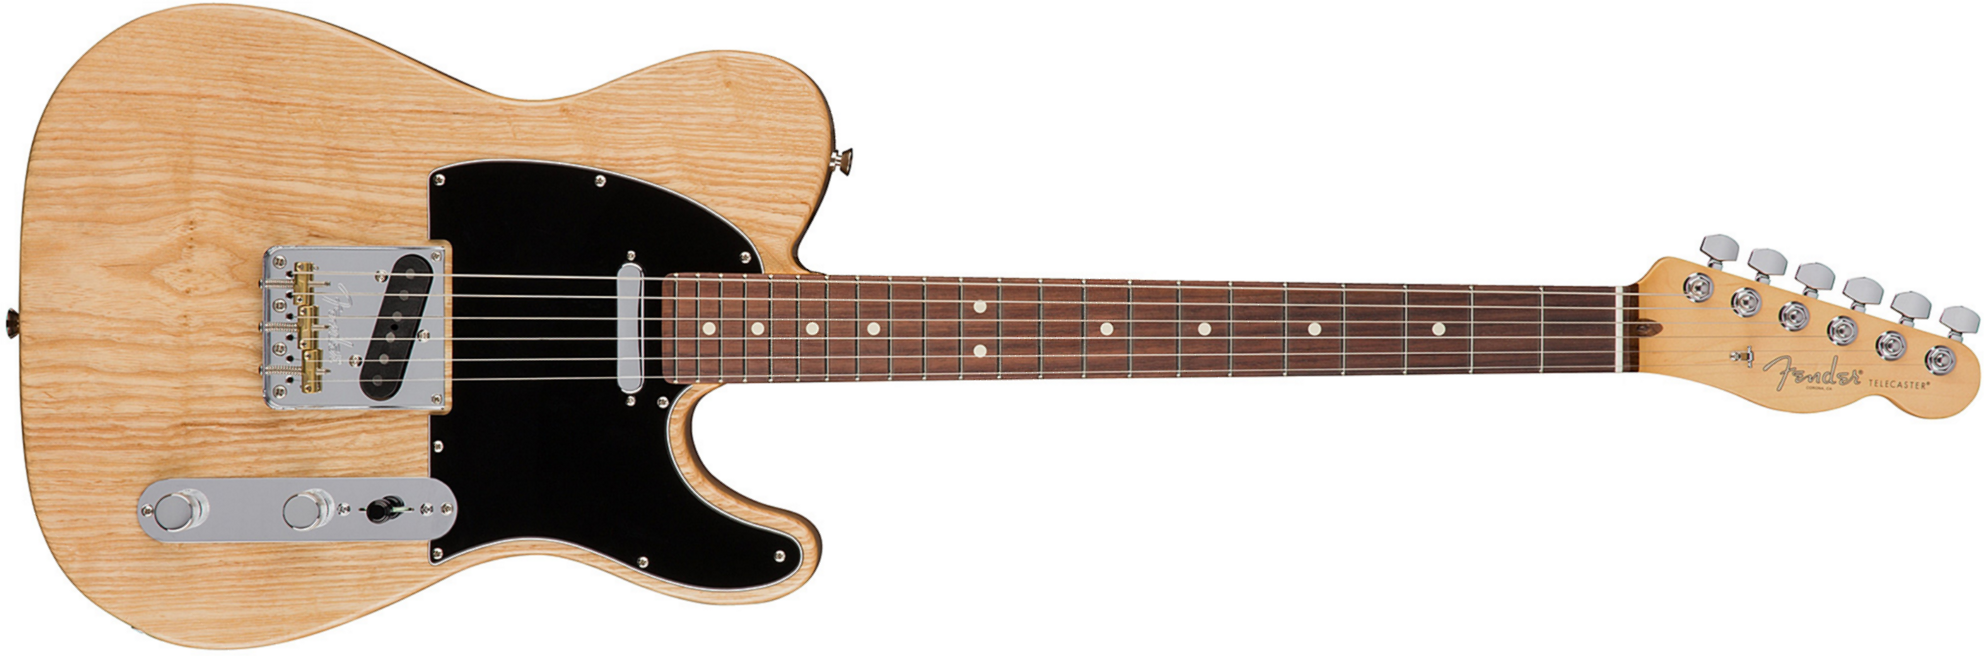 Fender Tele American Professional 2s Usa Rw - Natural - Televorm elektrische gitaar - Main picture